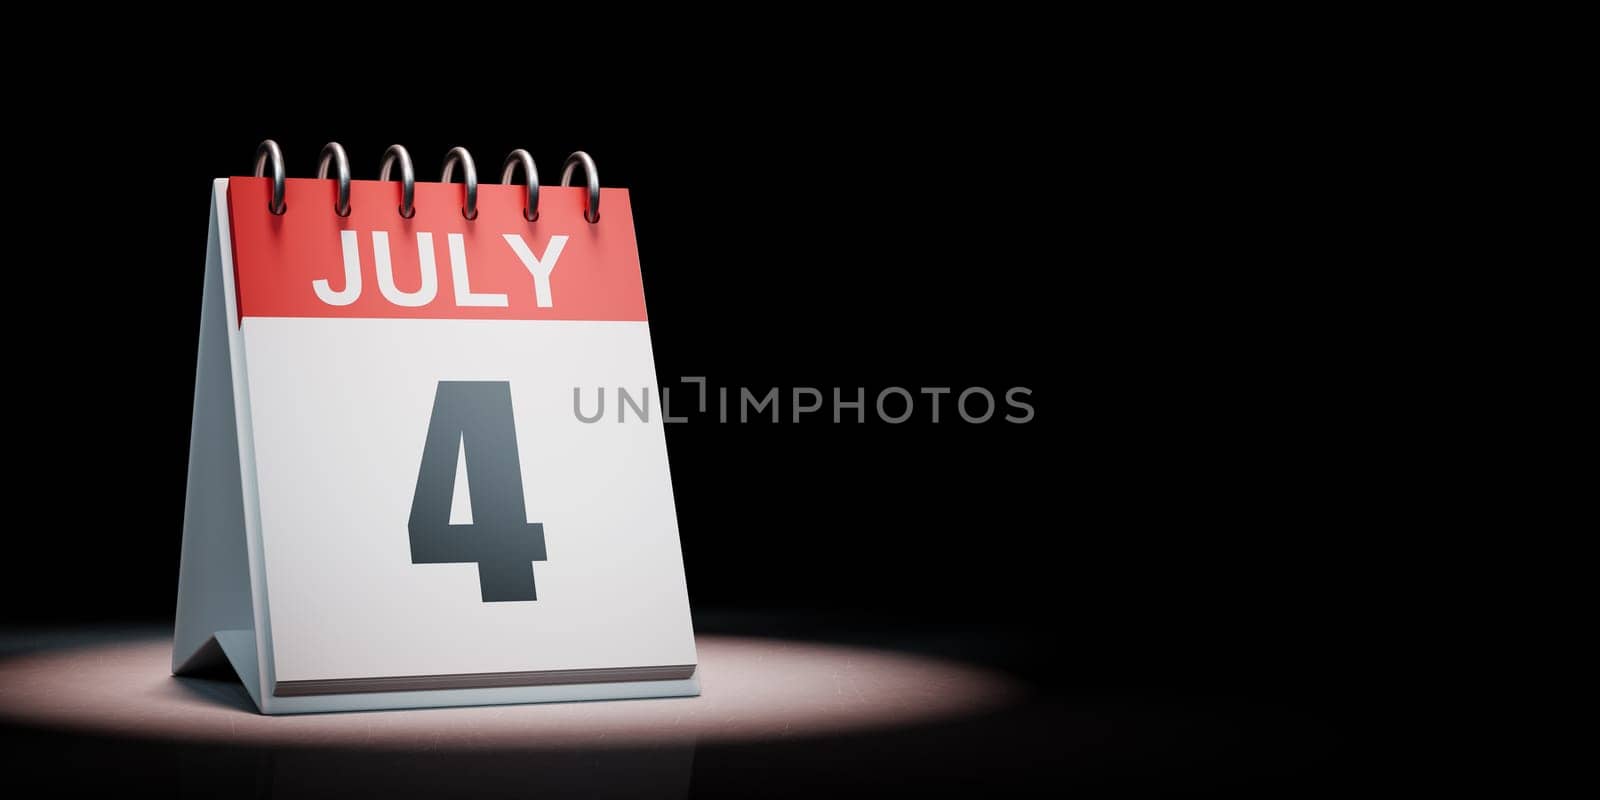 July 4 Calendar Spotlighted on Black Background by make